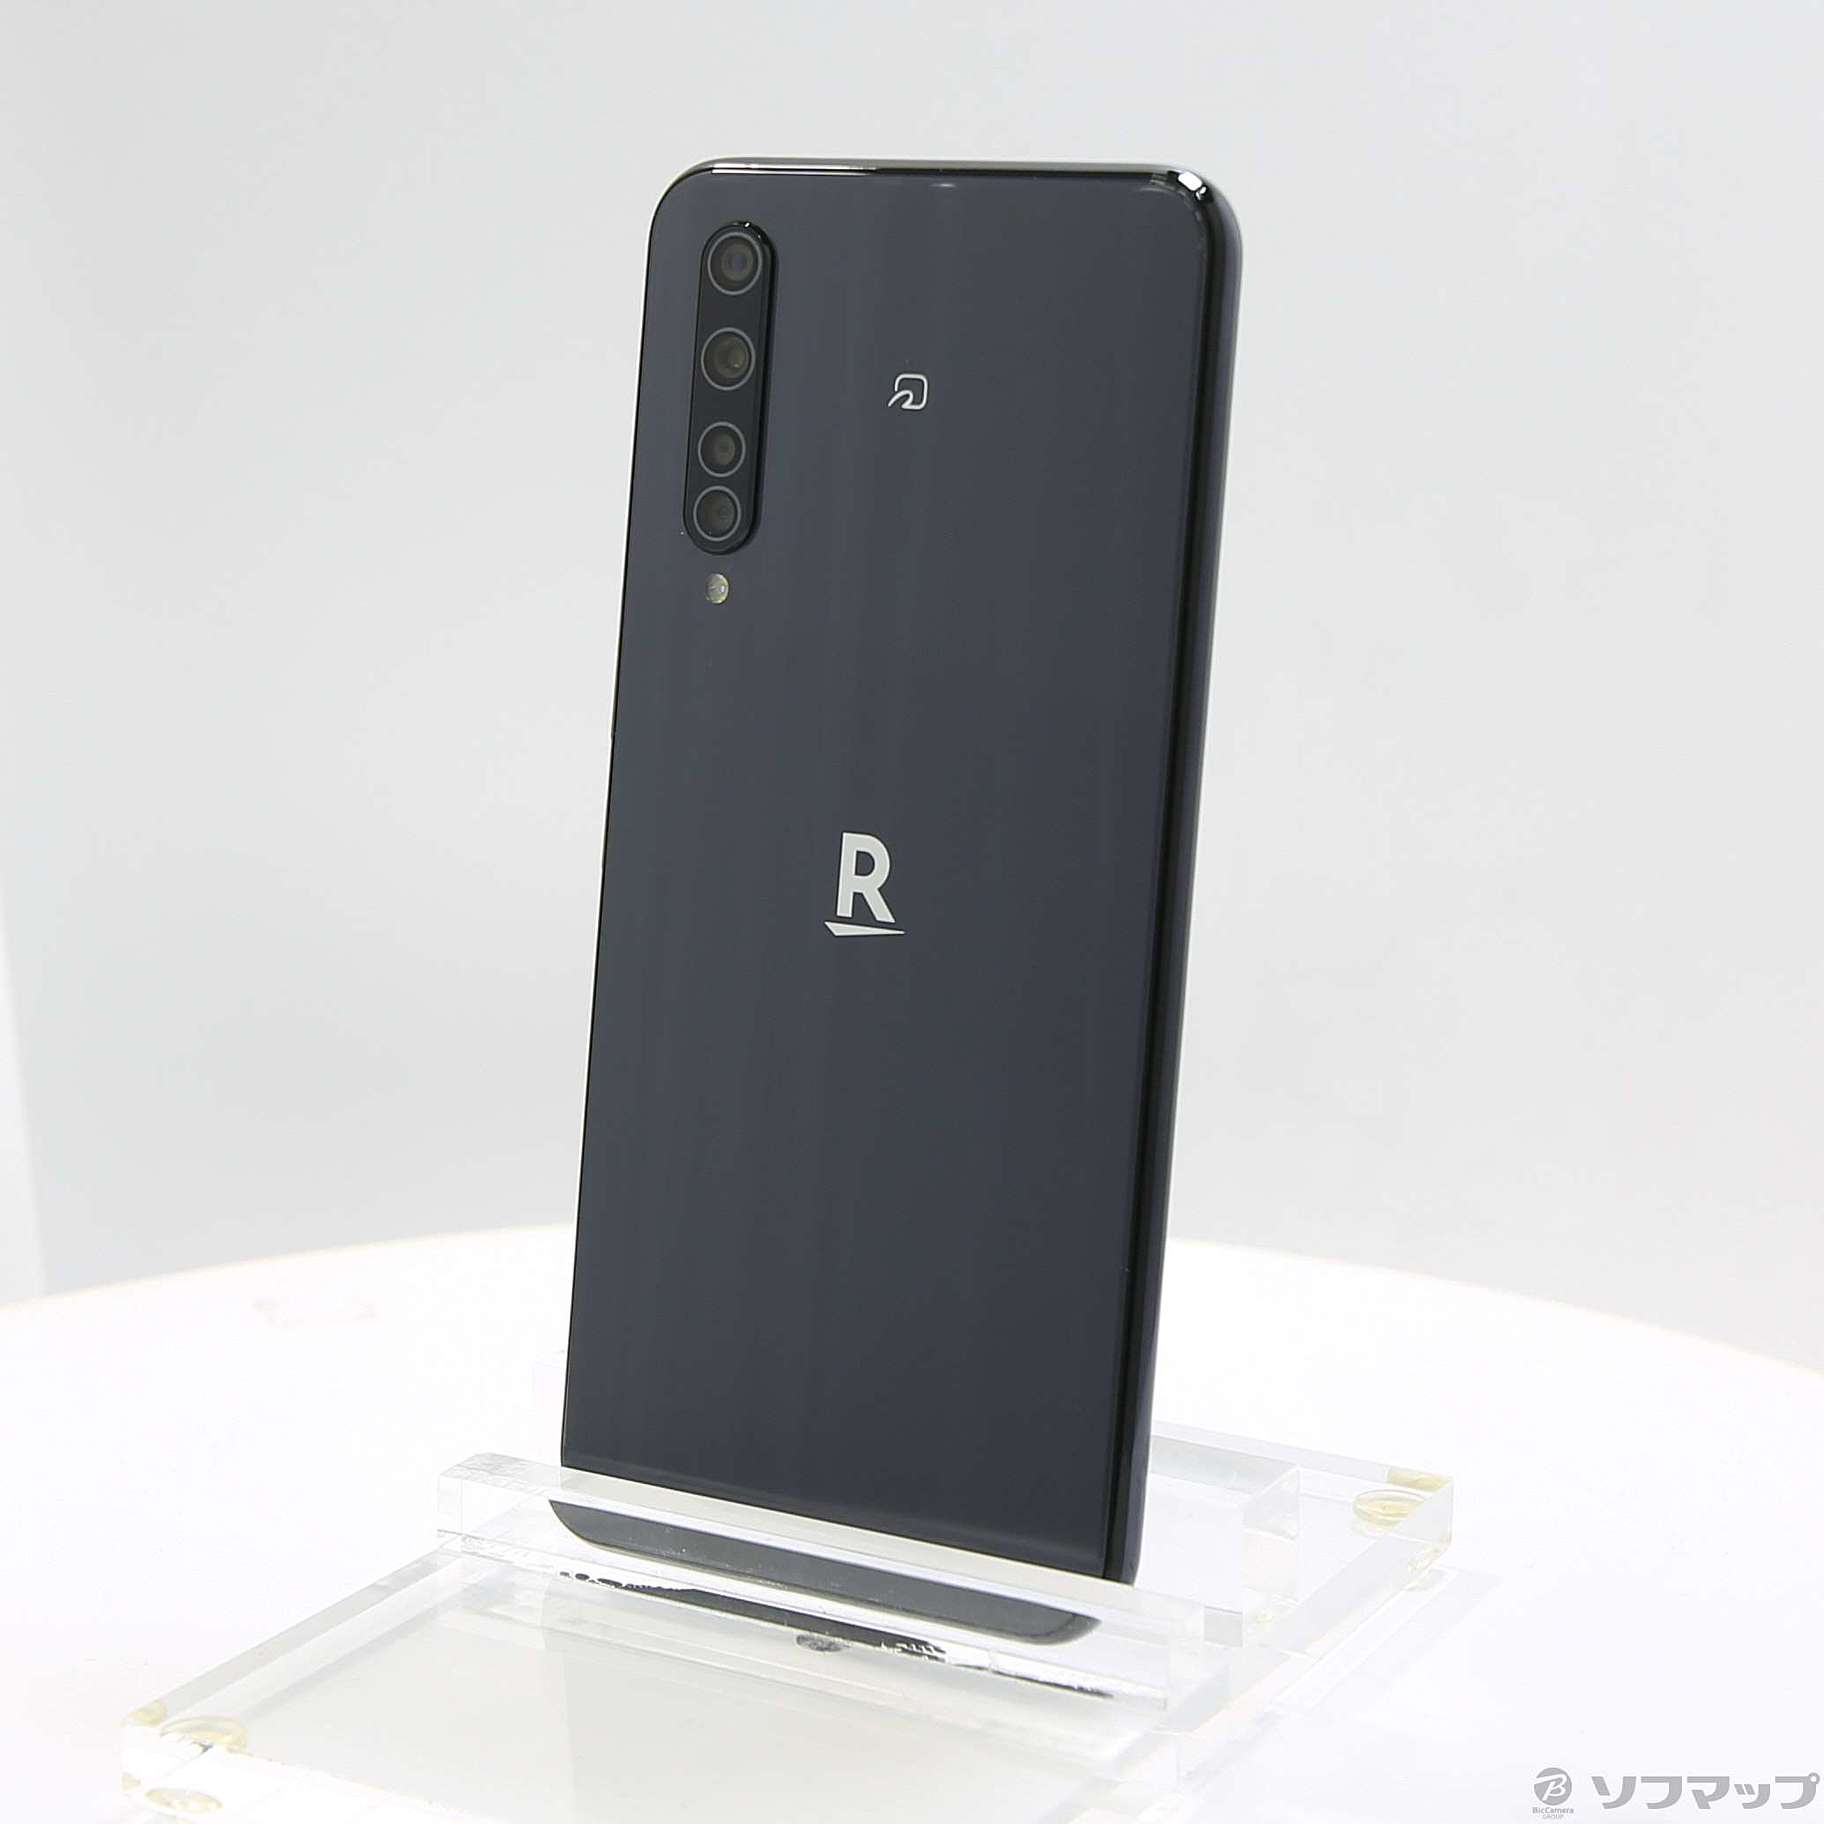 RakutenBIG型番Rakuten BIG【ZR01】 ブラック 品 SIMフリー